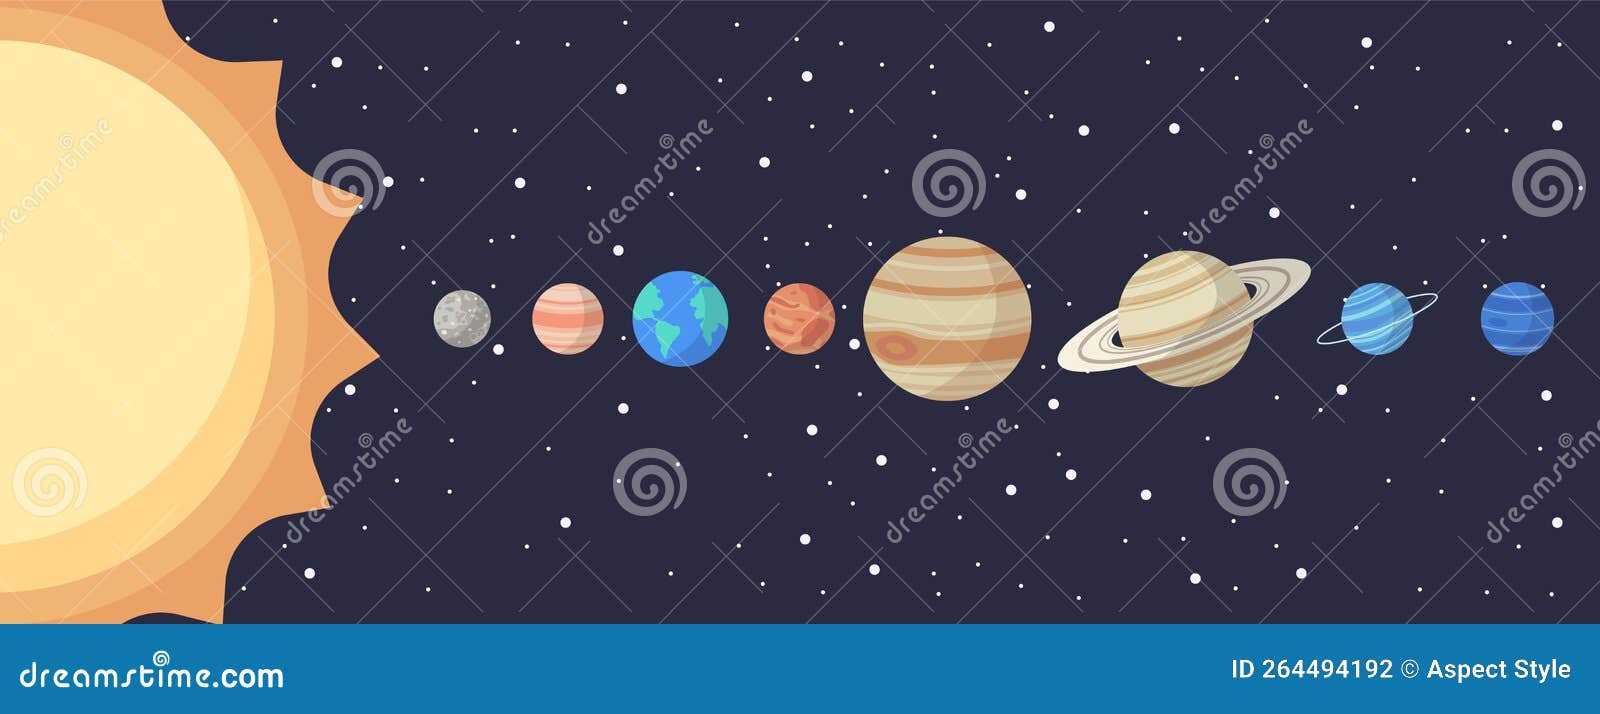 Sistema solar conjunto de planetas de dibujos animados. planetas